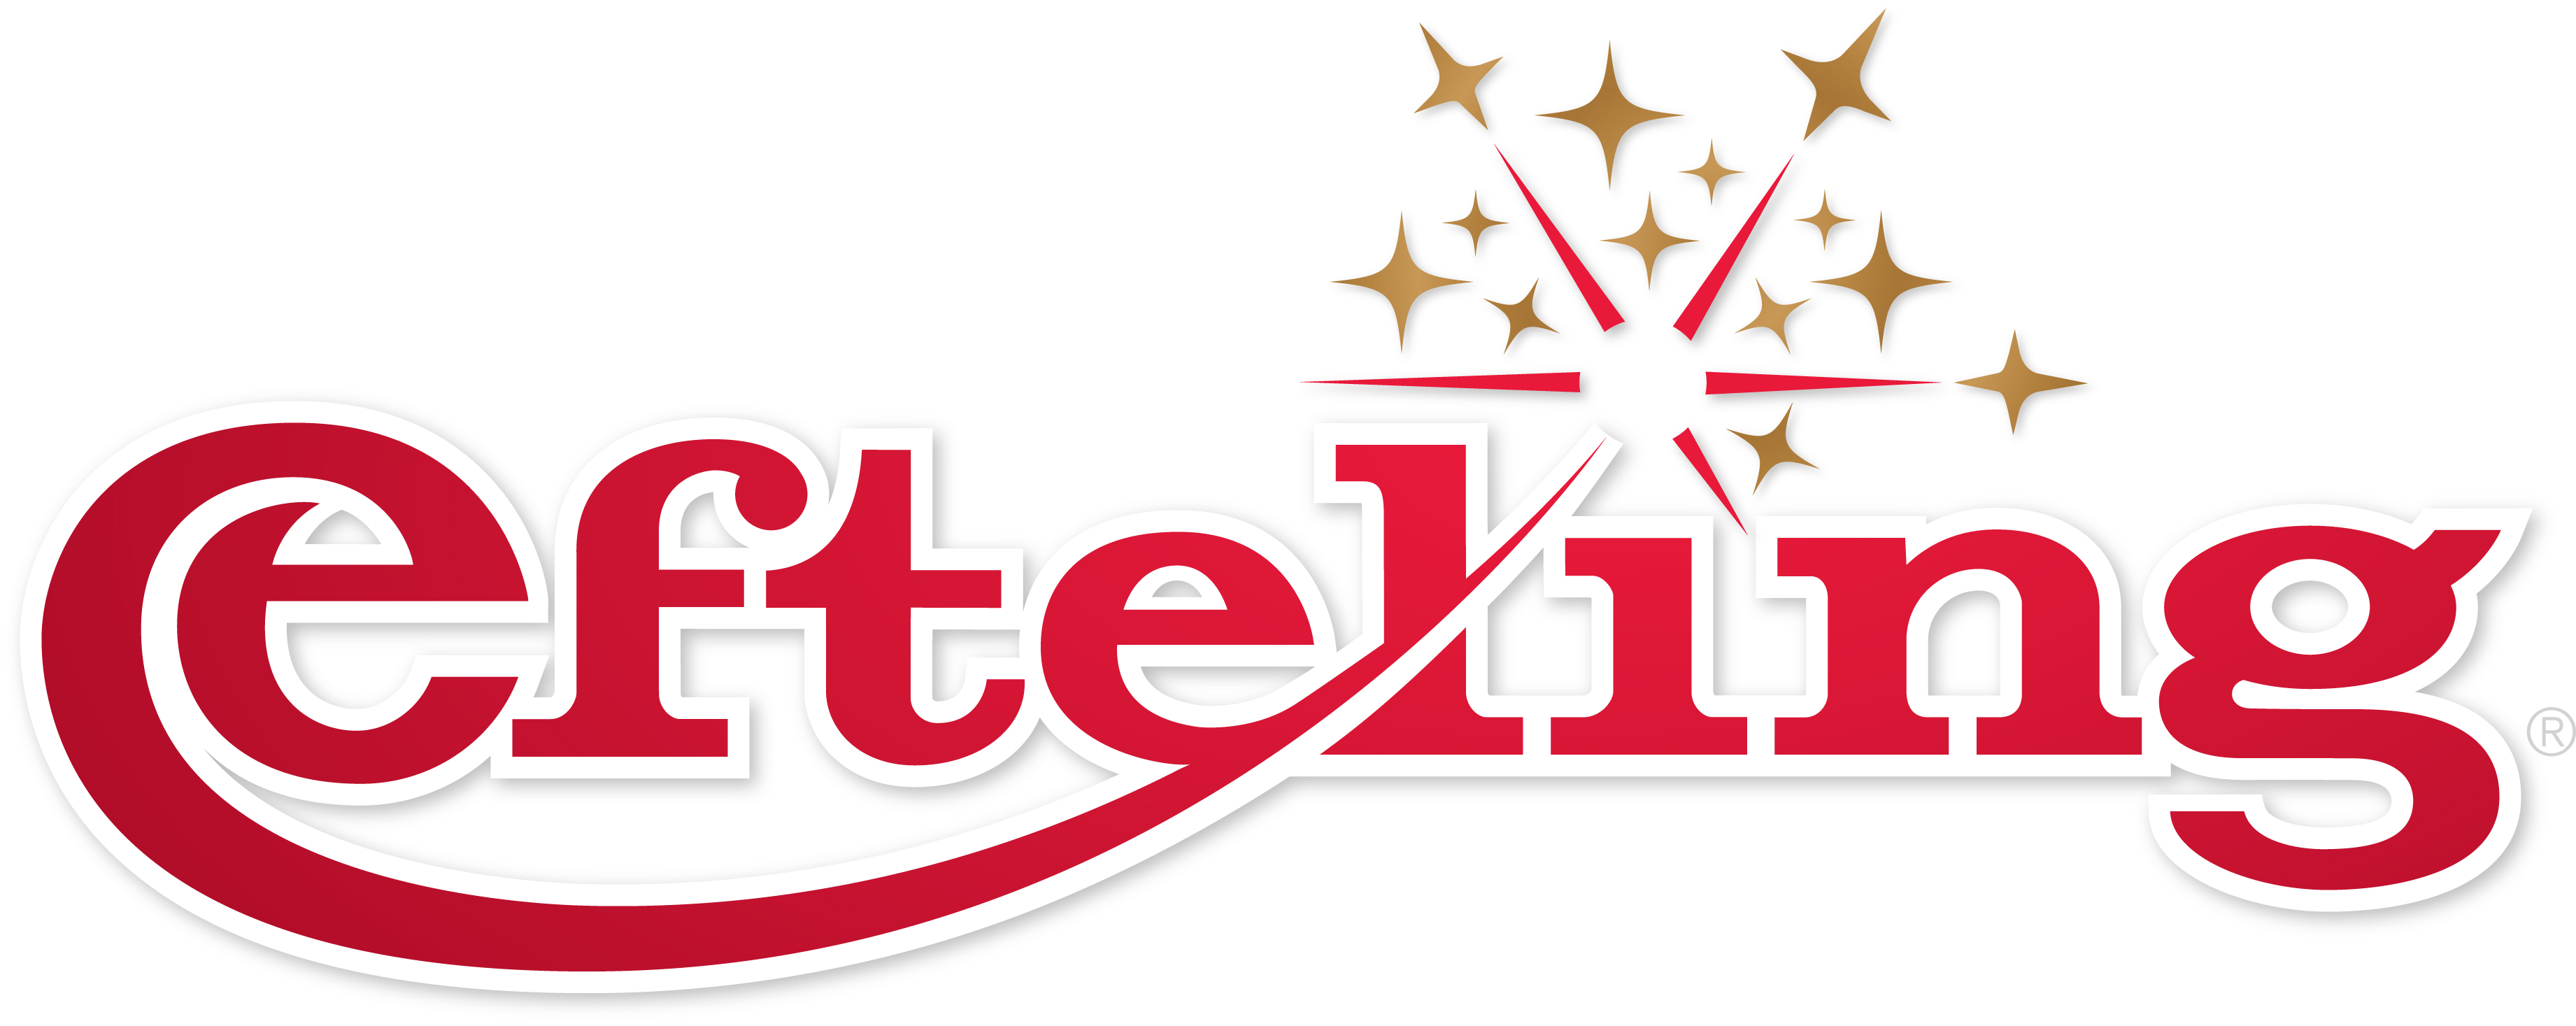 logo-efteling-16-LO.jpg